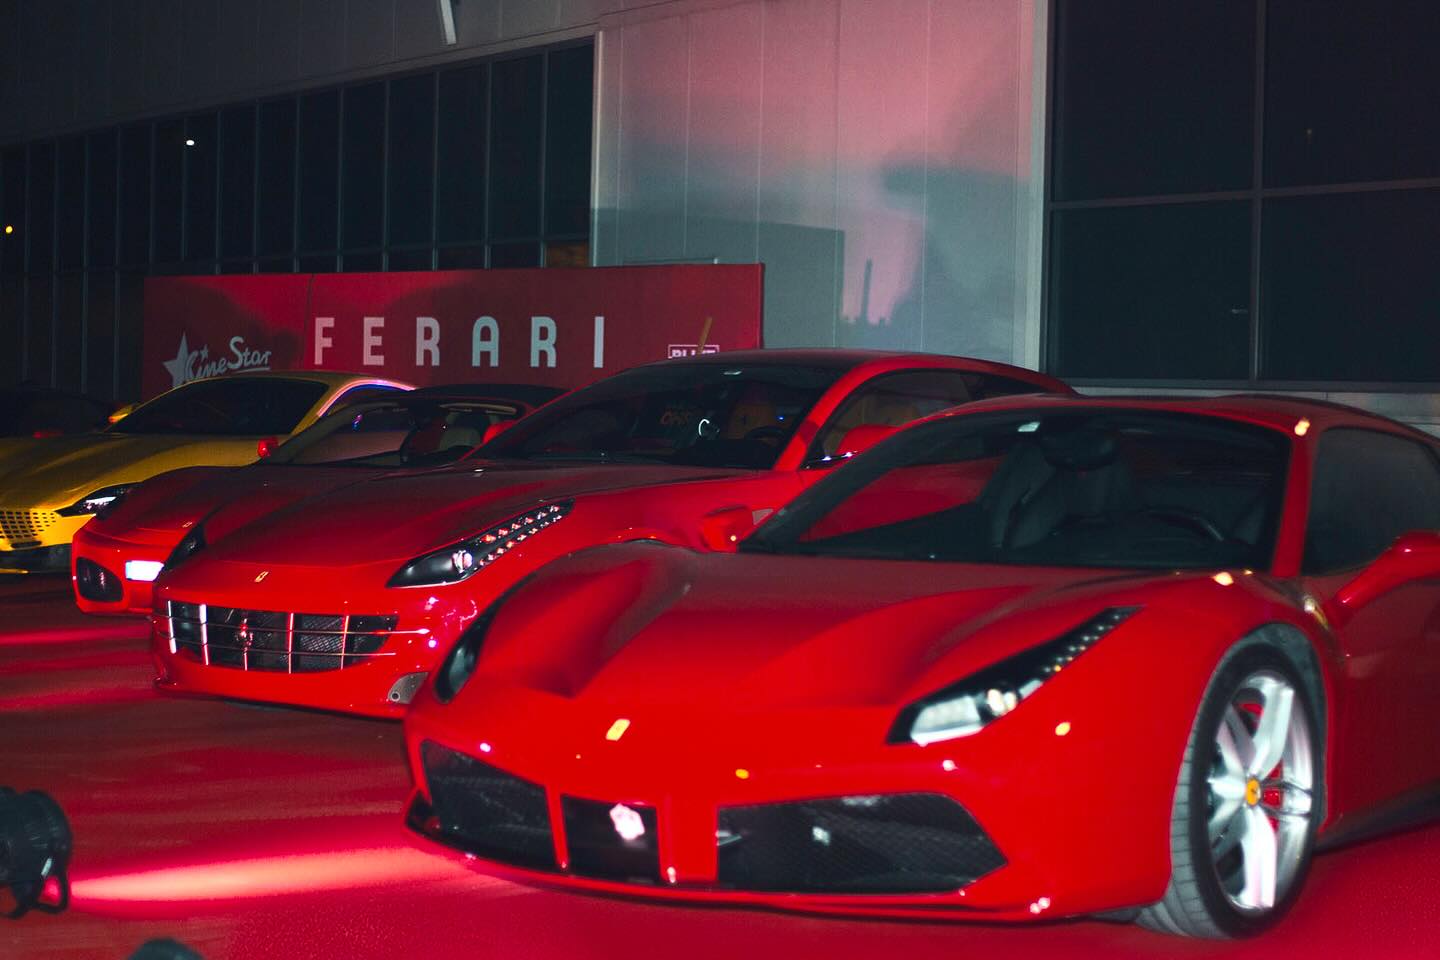 Serbian premiere of Ferrari and car exhibition, photo credit: Blitz Film & Video archive